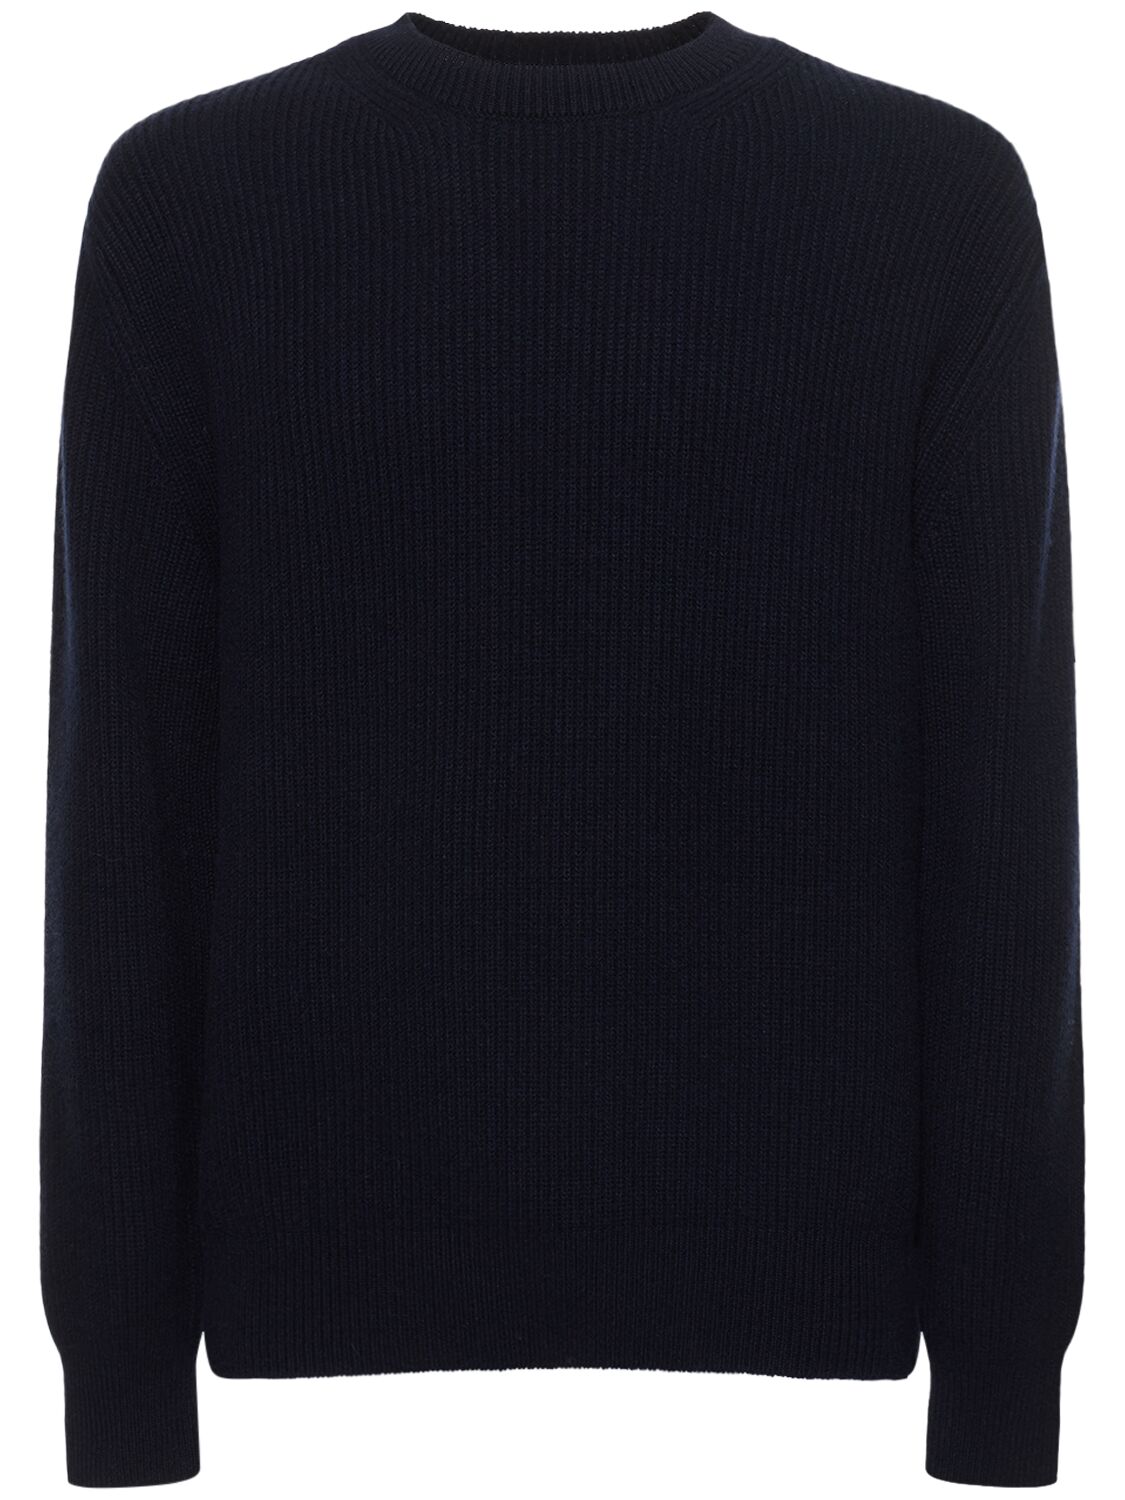 Image of Knit Crewneck Sweater